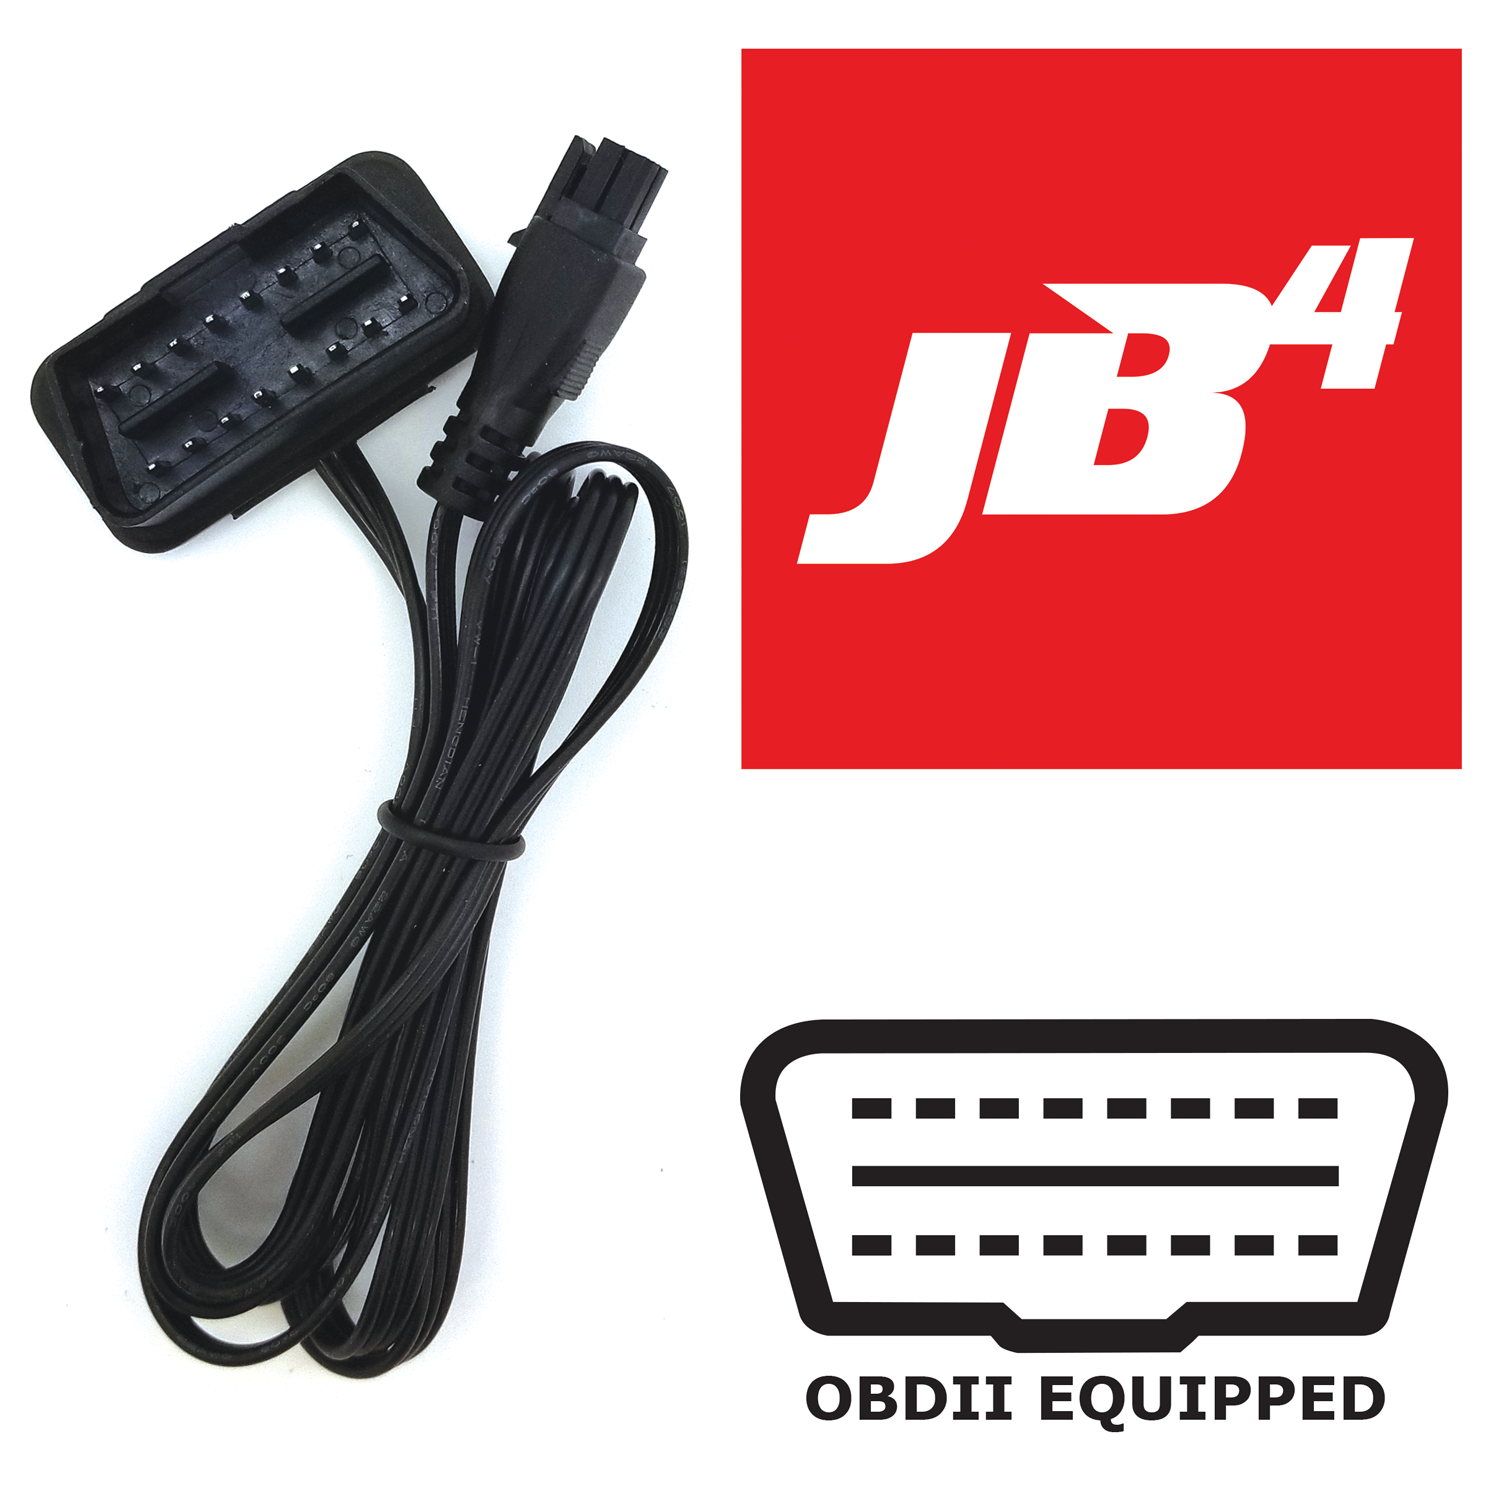 Black OBDII equipped JB4 tuner kit